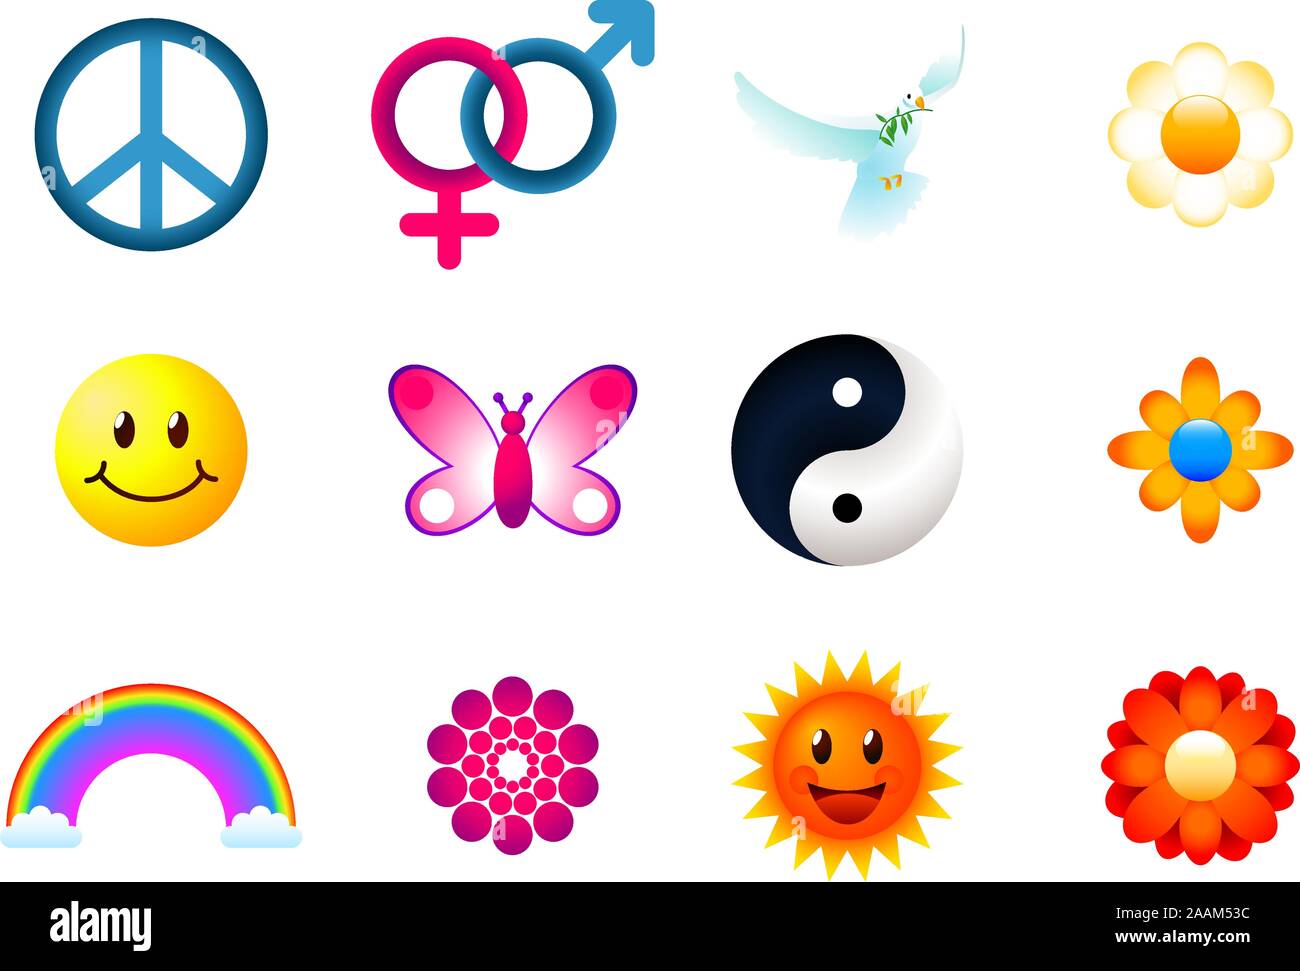 Peace icons set, with man, woman, flower, smiley, butterfly, yin yang, rainbow, sun. Vector illustration cartoon. Stock Vector